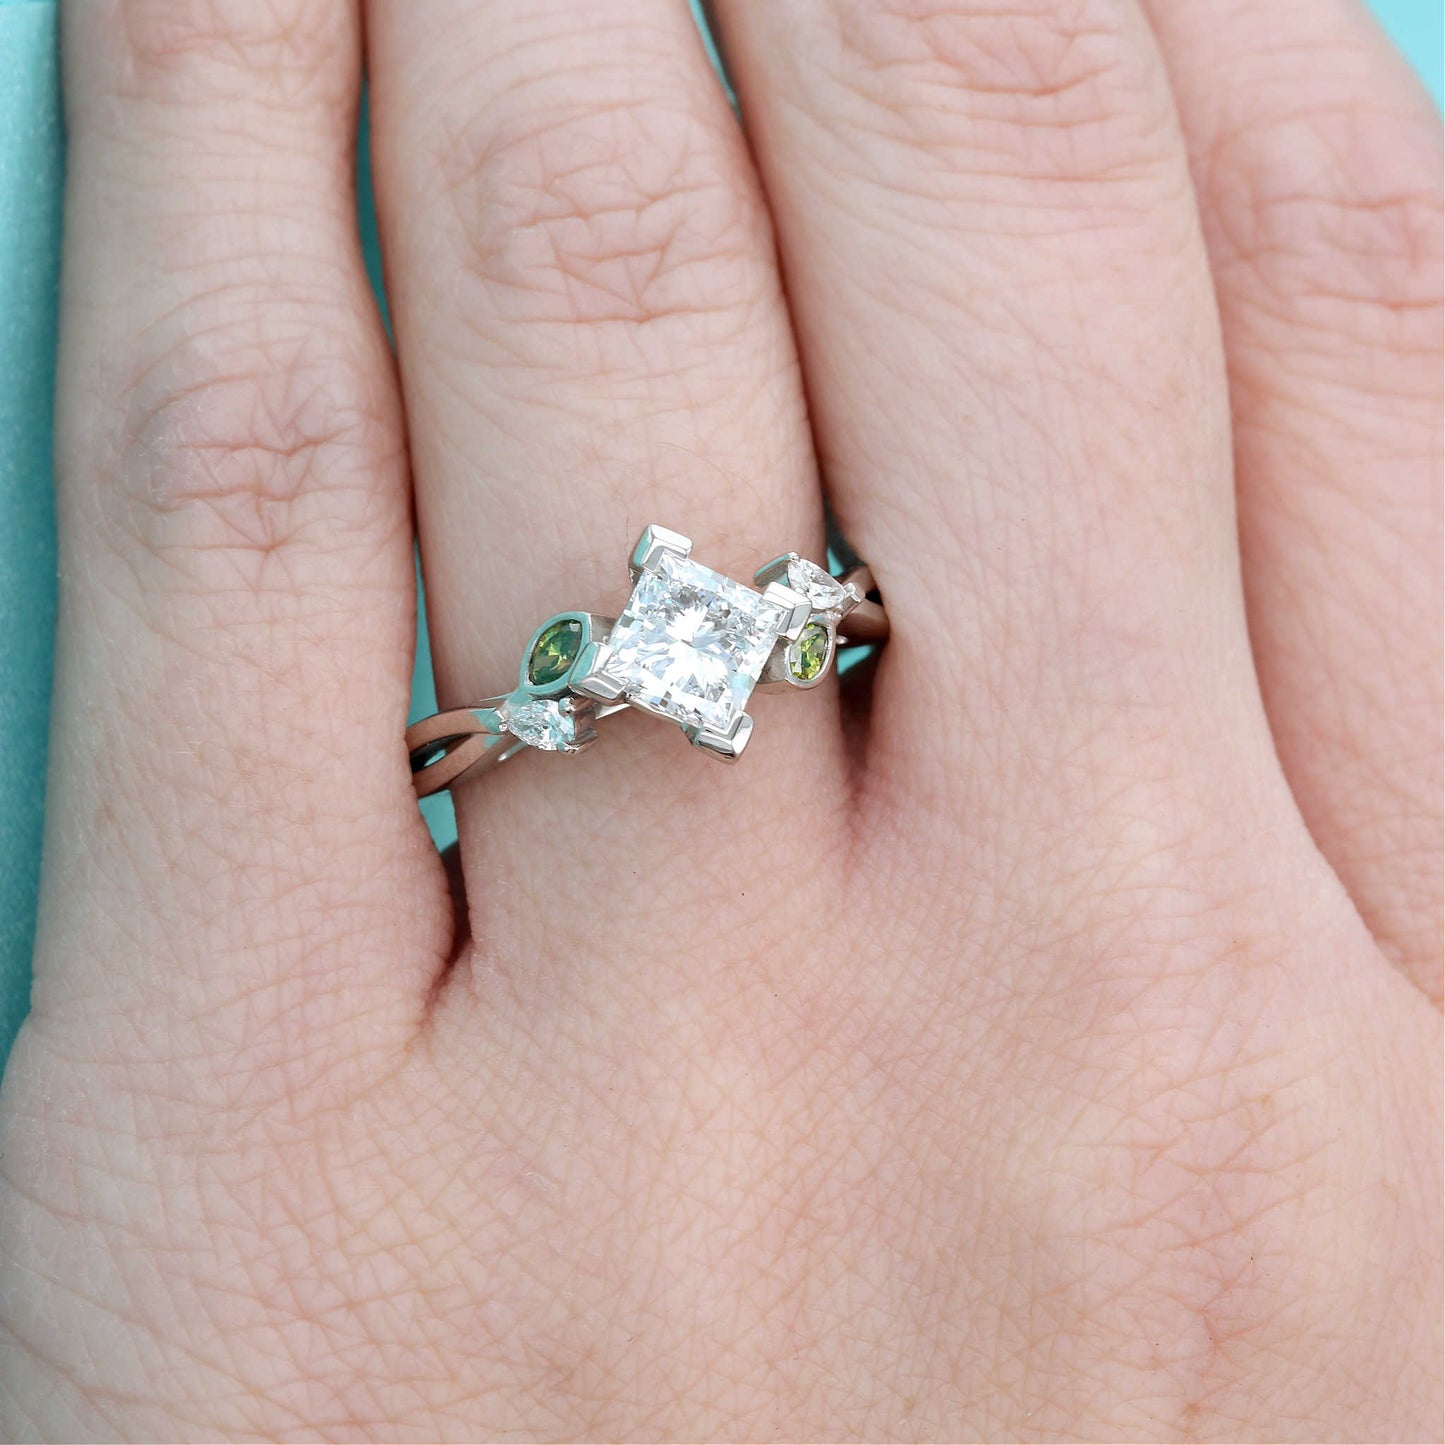 Green Diamond & Princess Cut Diamond Engagement Ring on a Finger